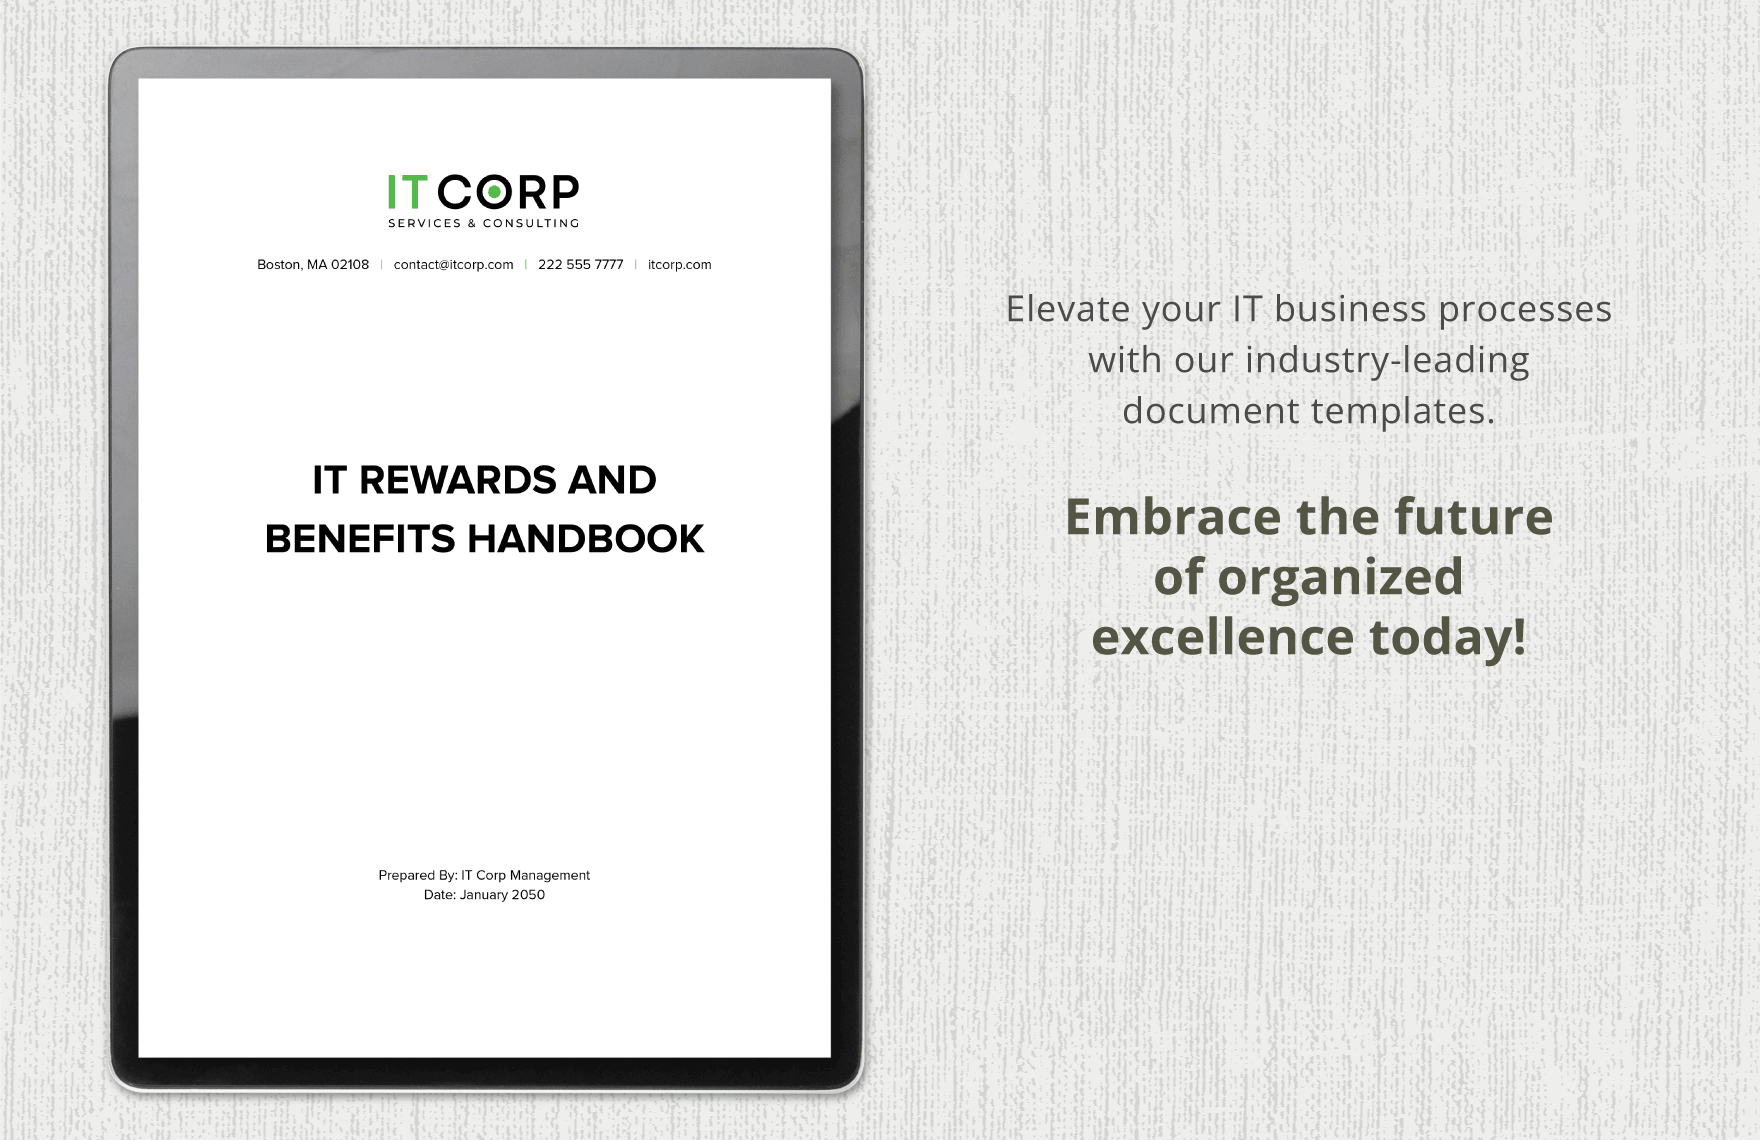 IT Rewards and Benefits Handbook Template